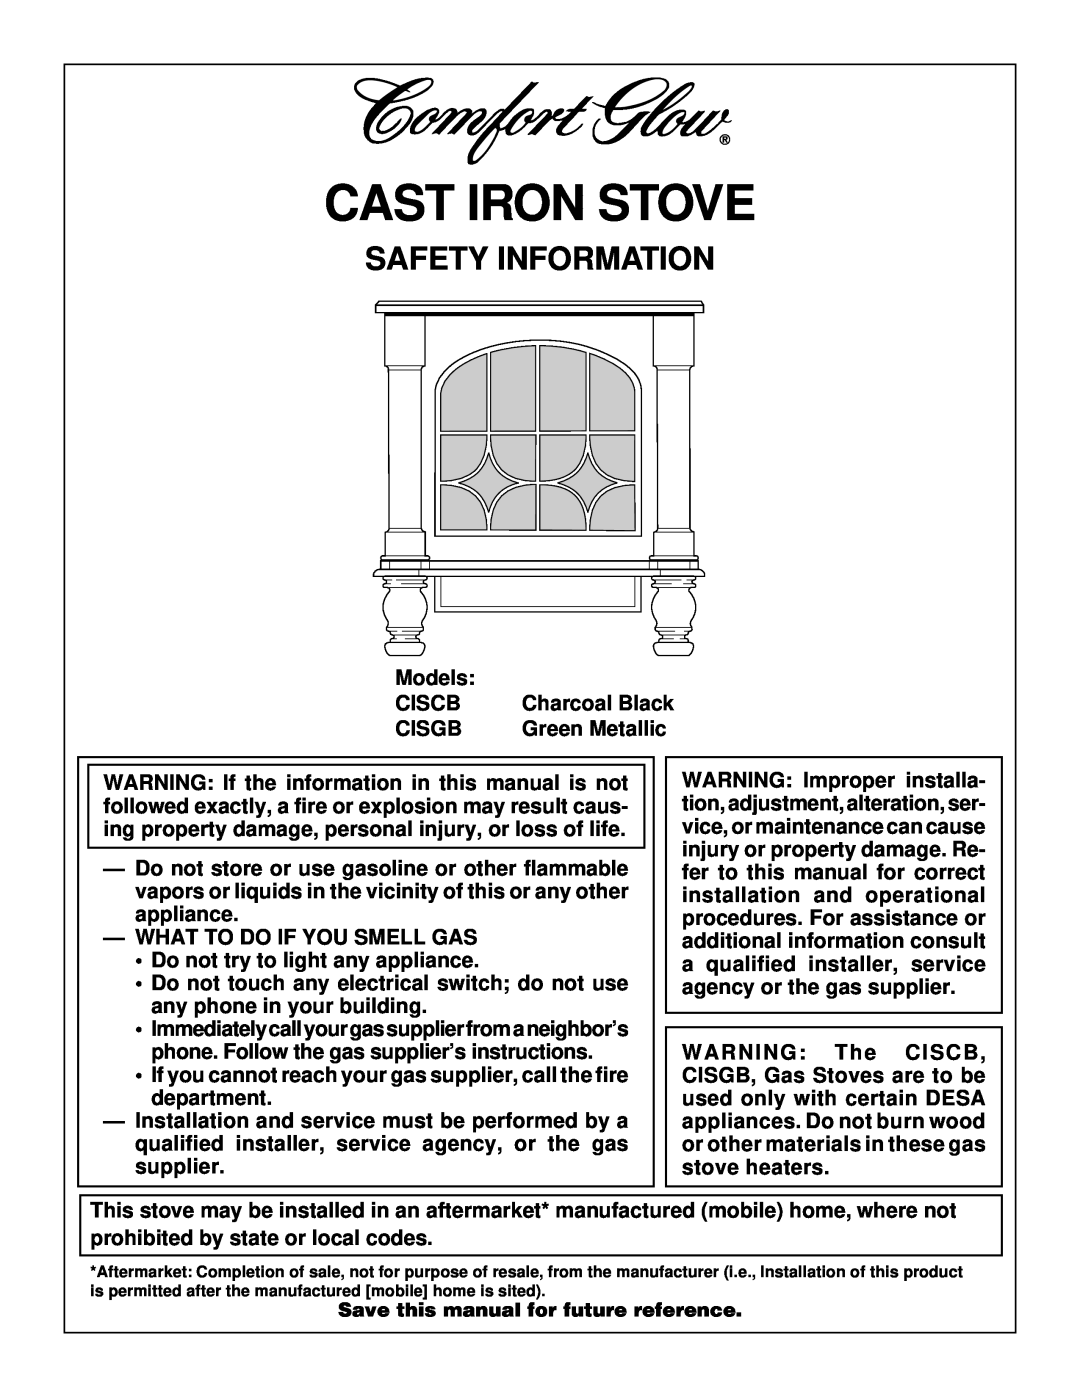 Desa CISCB manual Cast Iron Stove, Safety Information 